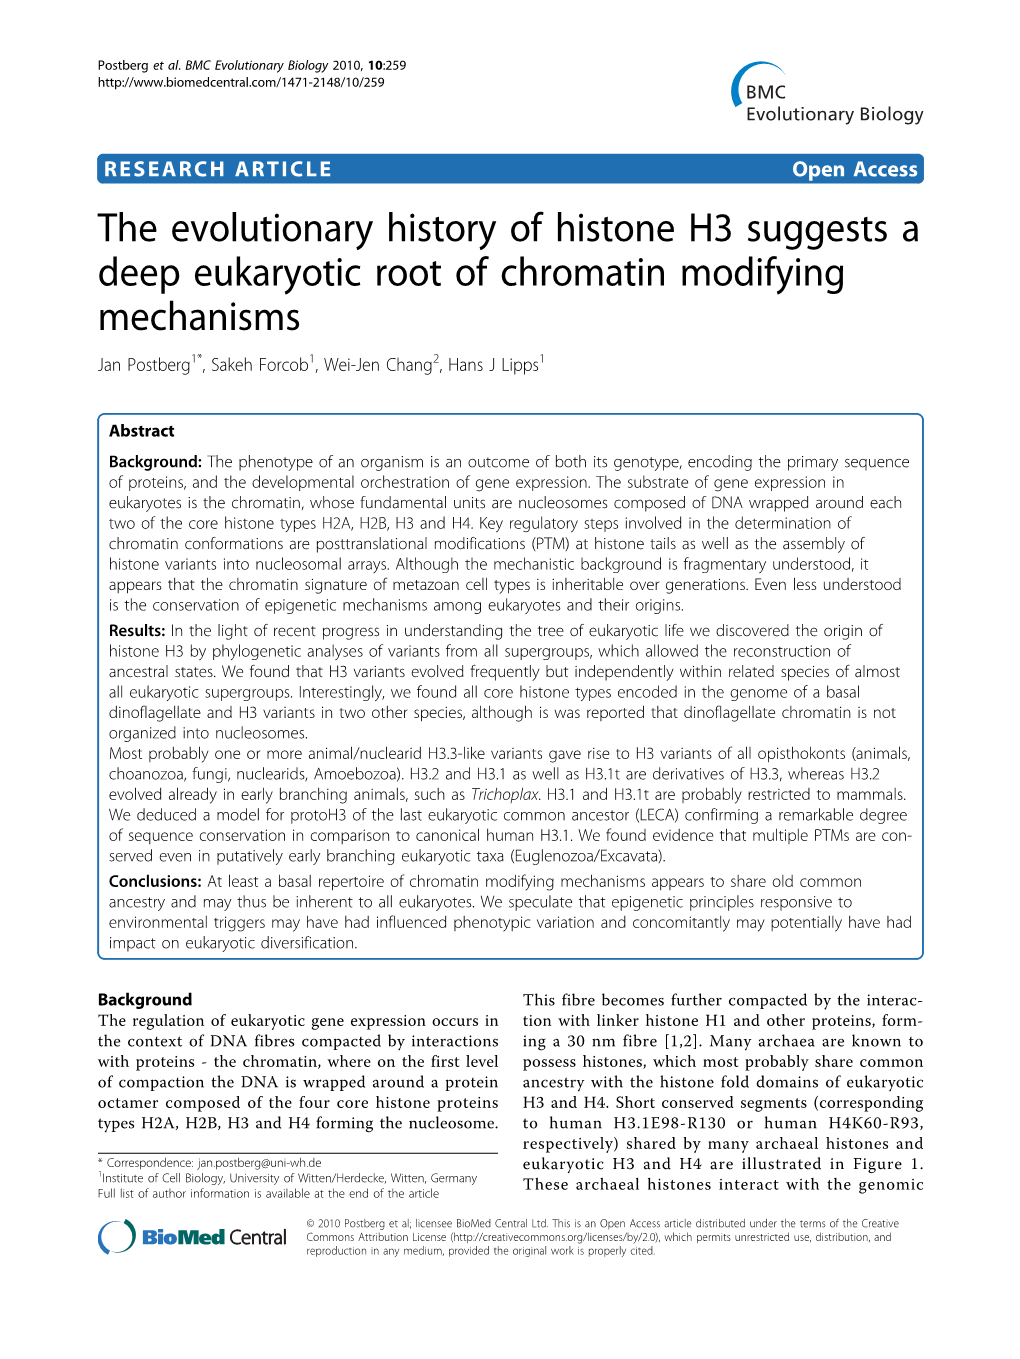 The Evolutionary History of Histone H3 Suggests a Deep Eukaryotic Root of Chromatin Modifying Mechanisms Jan Postberg1*, Sakeh Forcob1, Wei-Jen Chang2, Hans J Lipps1